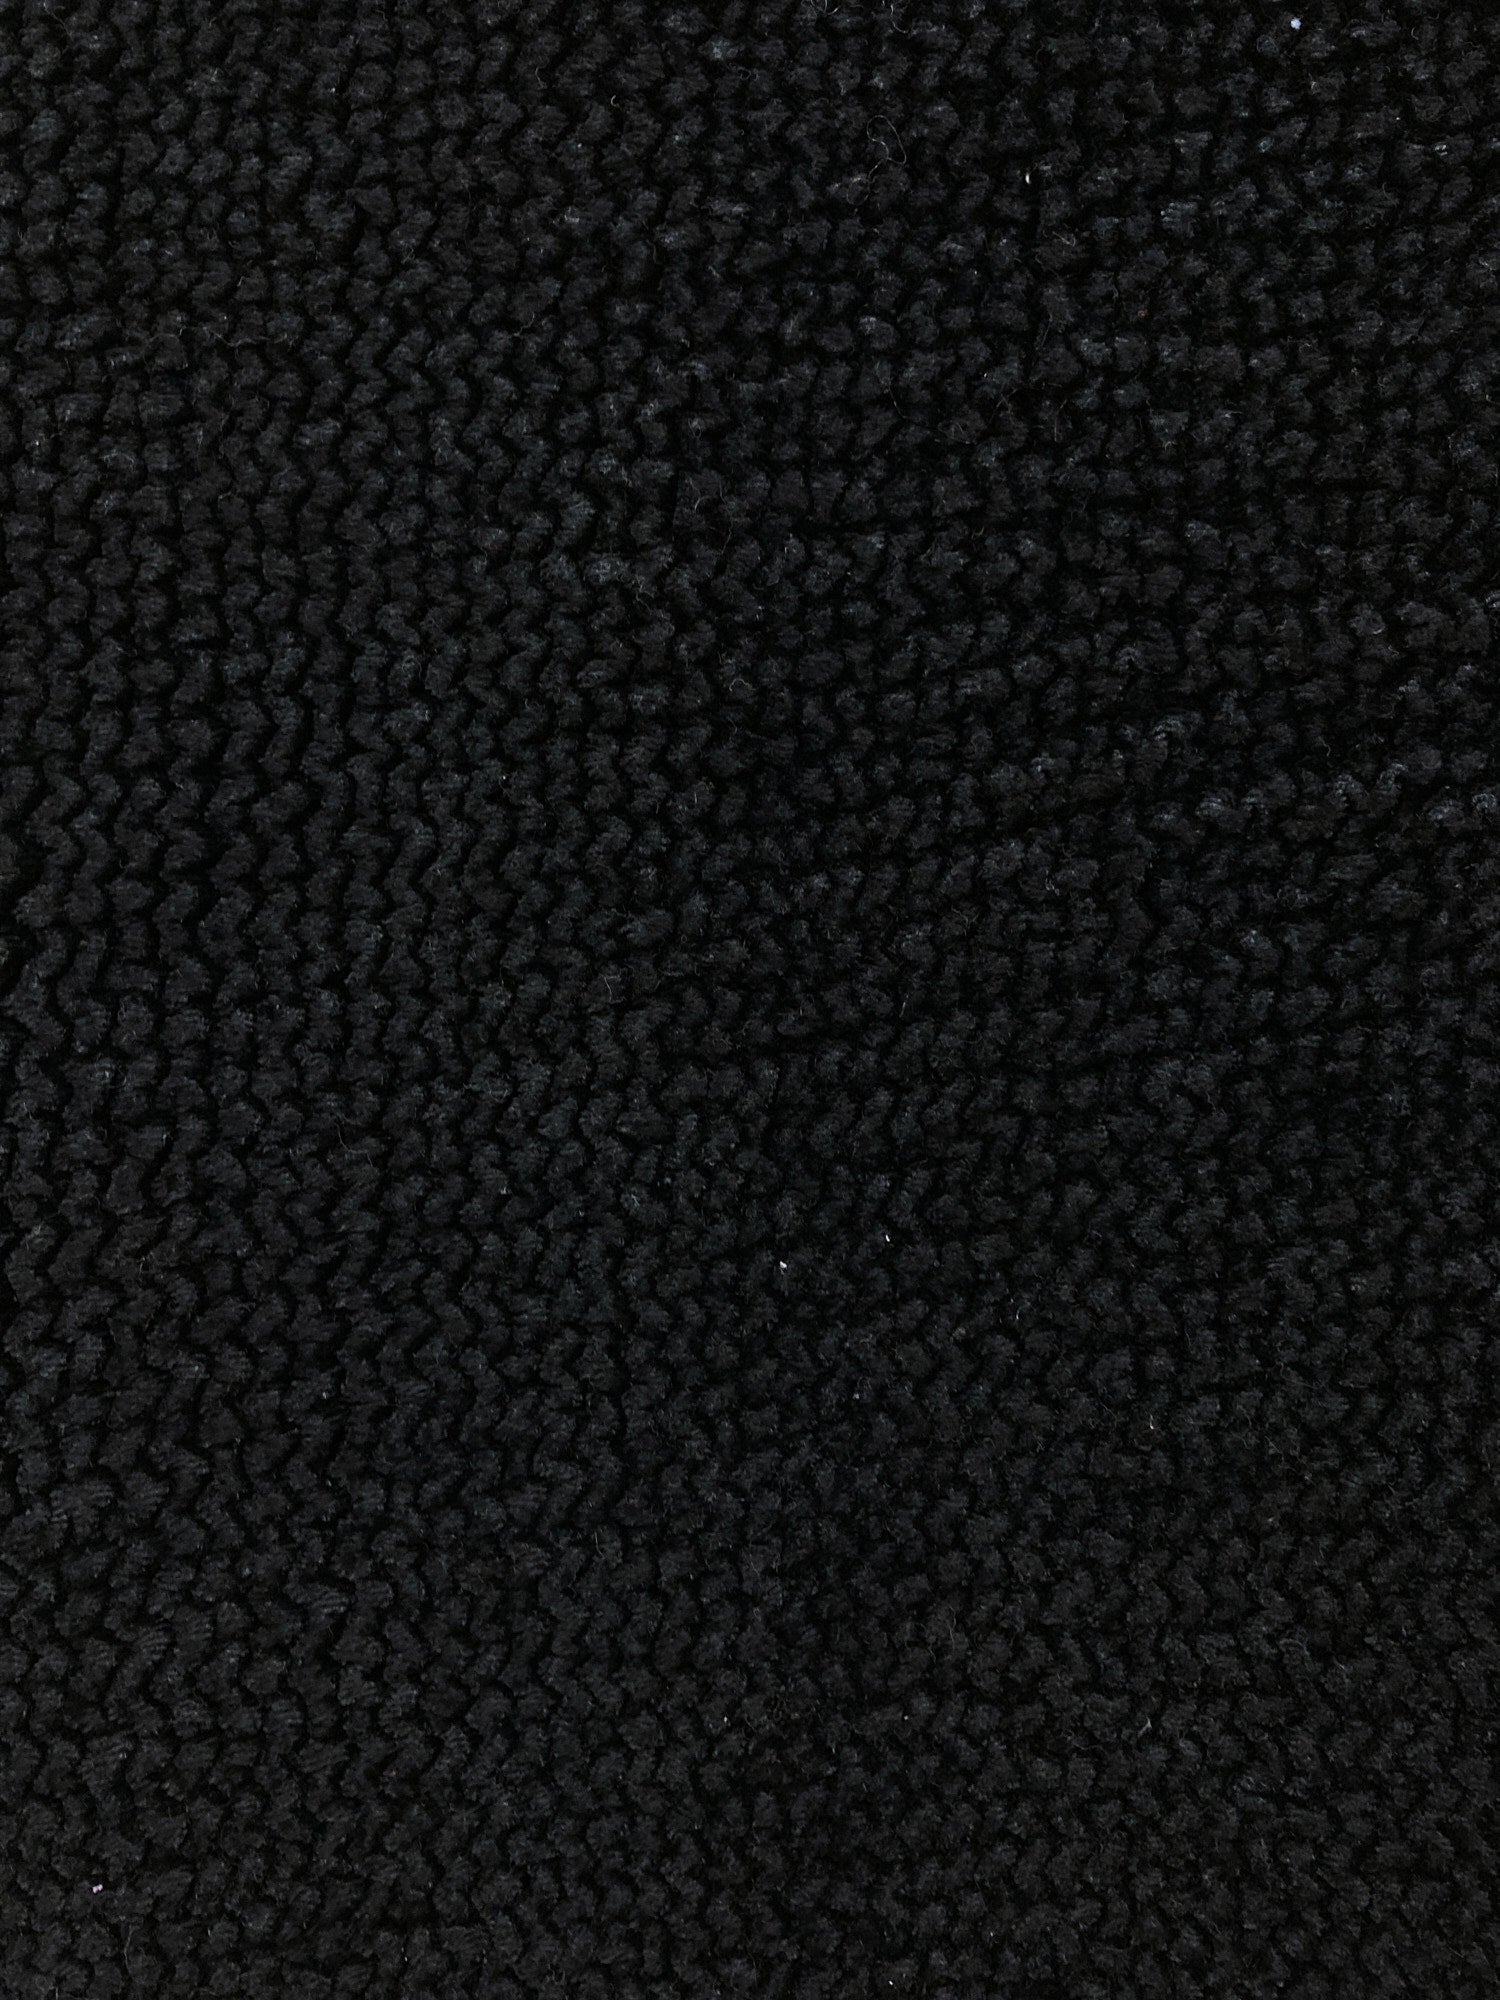 Yoshiki Hishinuma Peplum black wrinkled high neck top with lacework - sz 2 S M